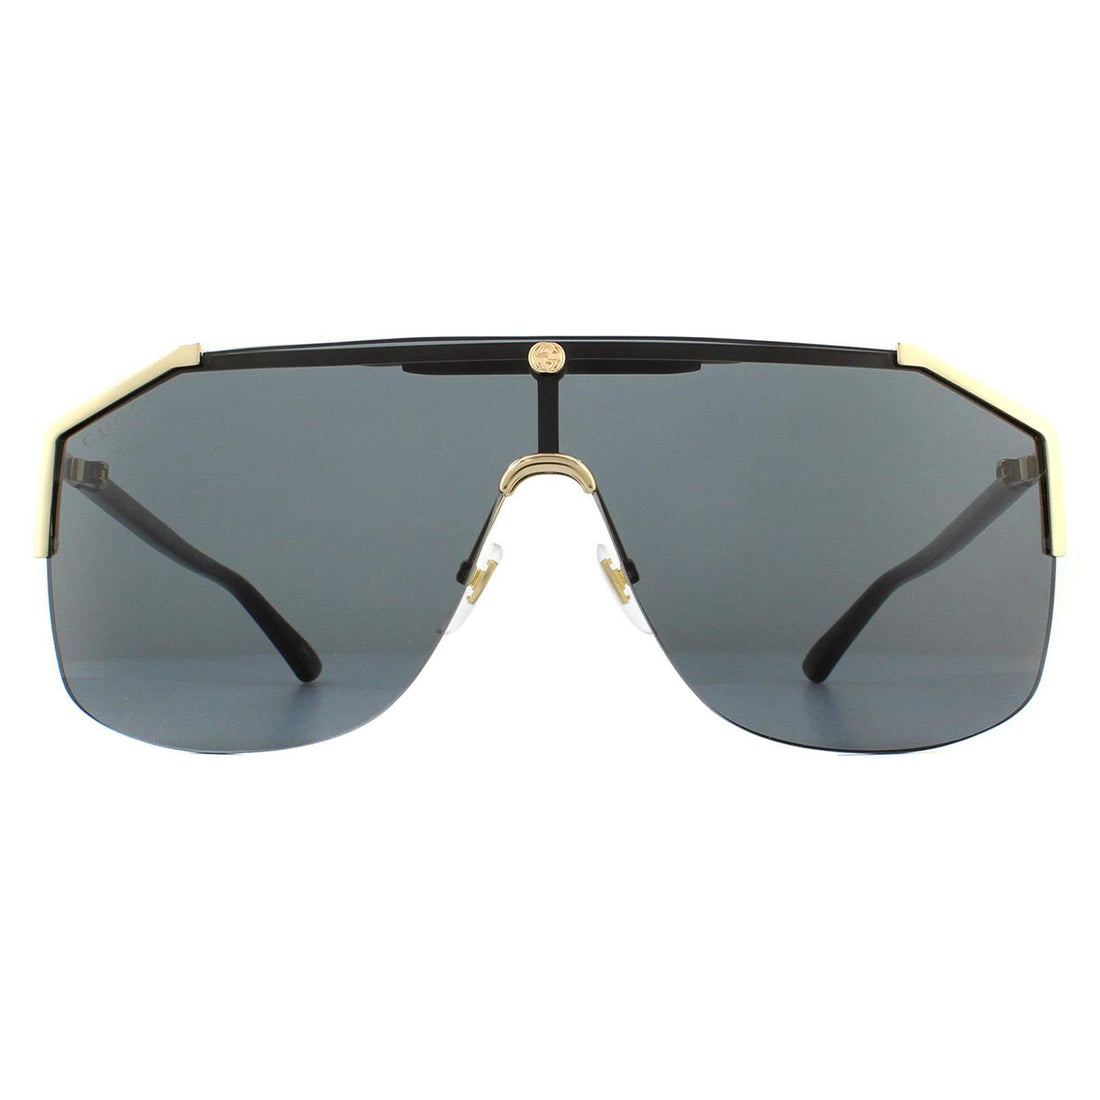 Gucci GG0291S Sunglasses Gold and Black / Grey